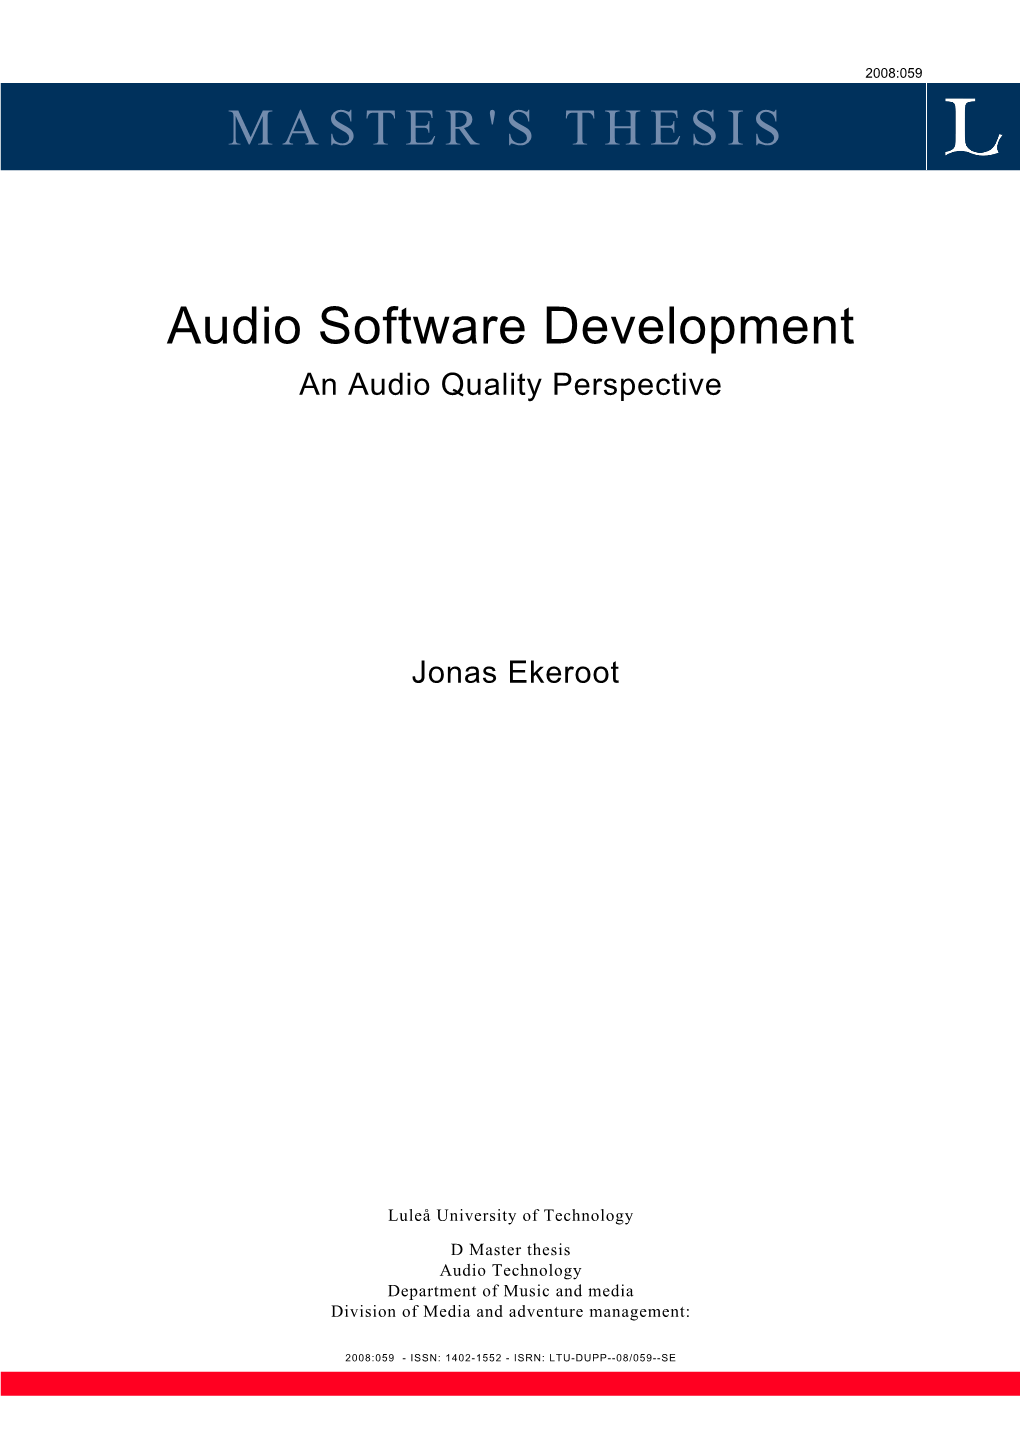 MASTER's THESIS Audio Software Development